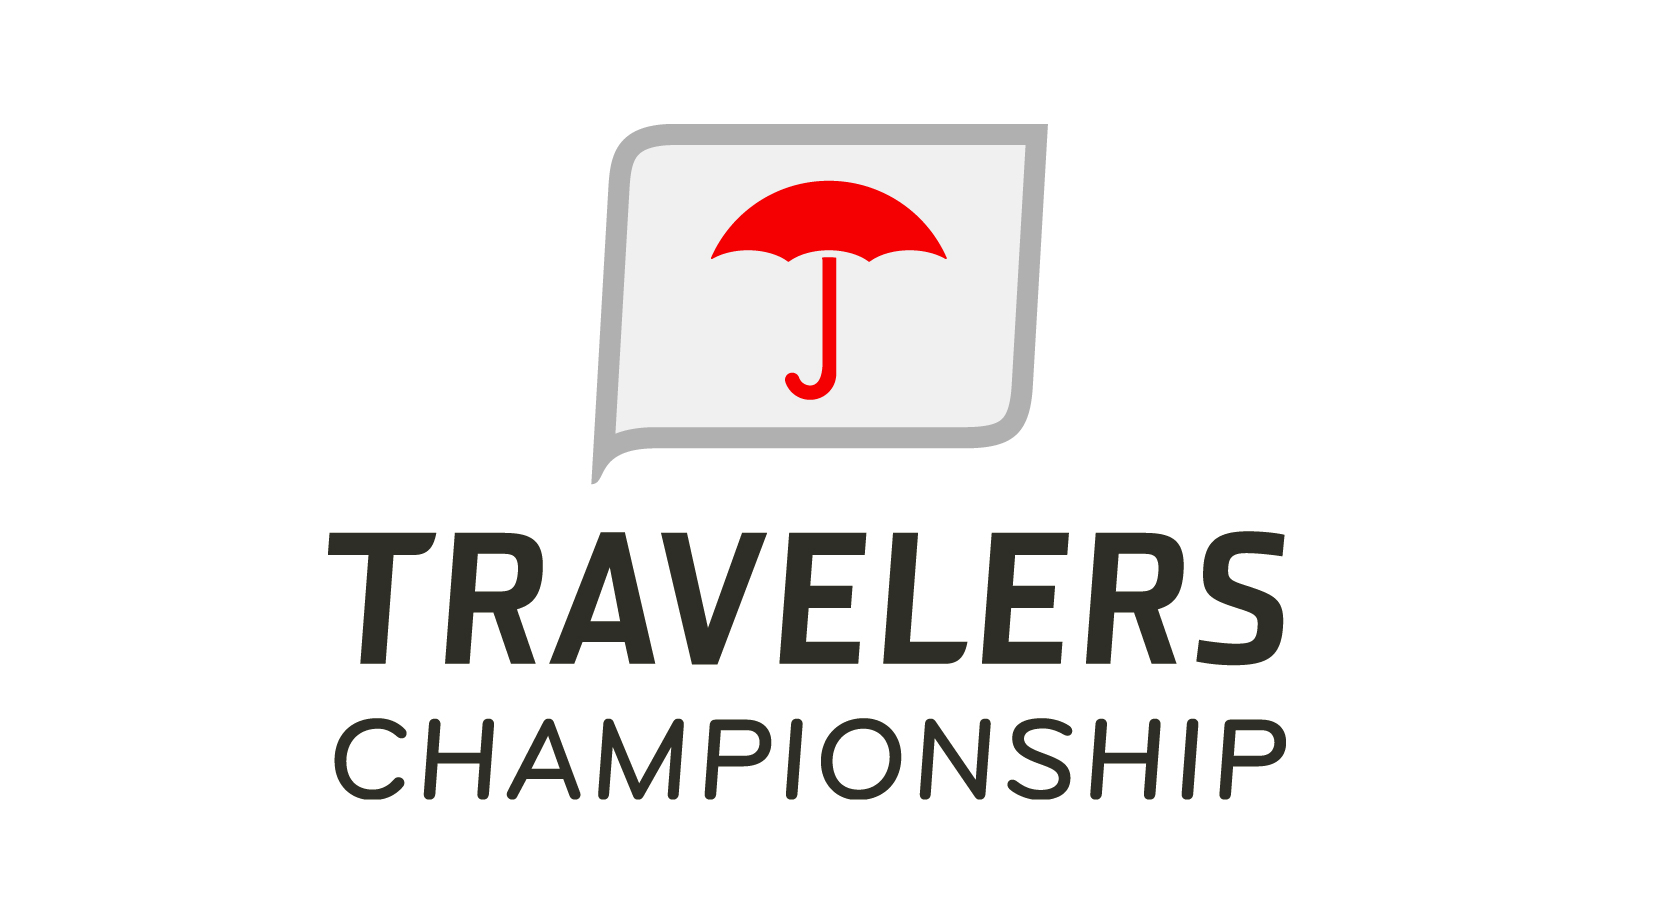 The Travelers Championship logo